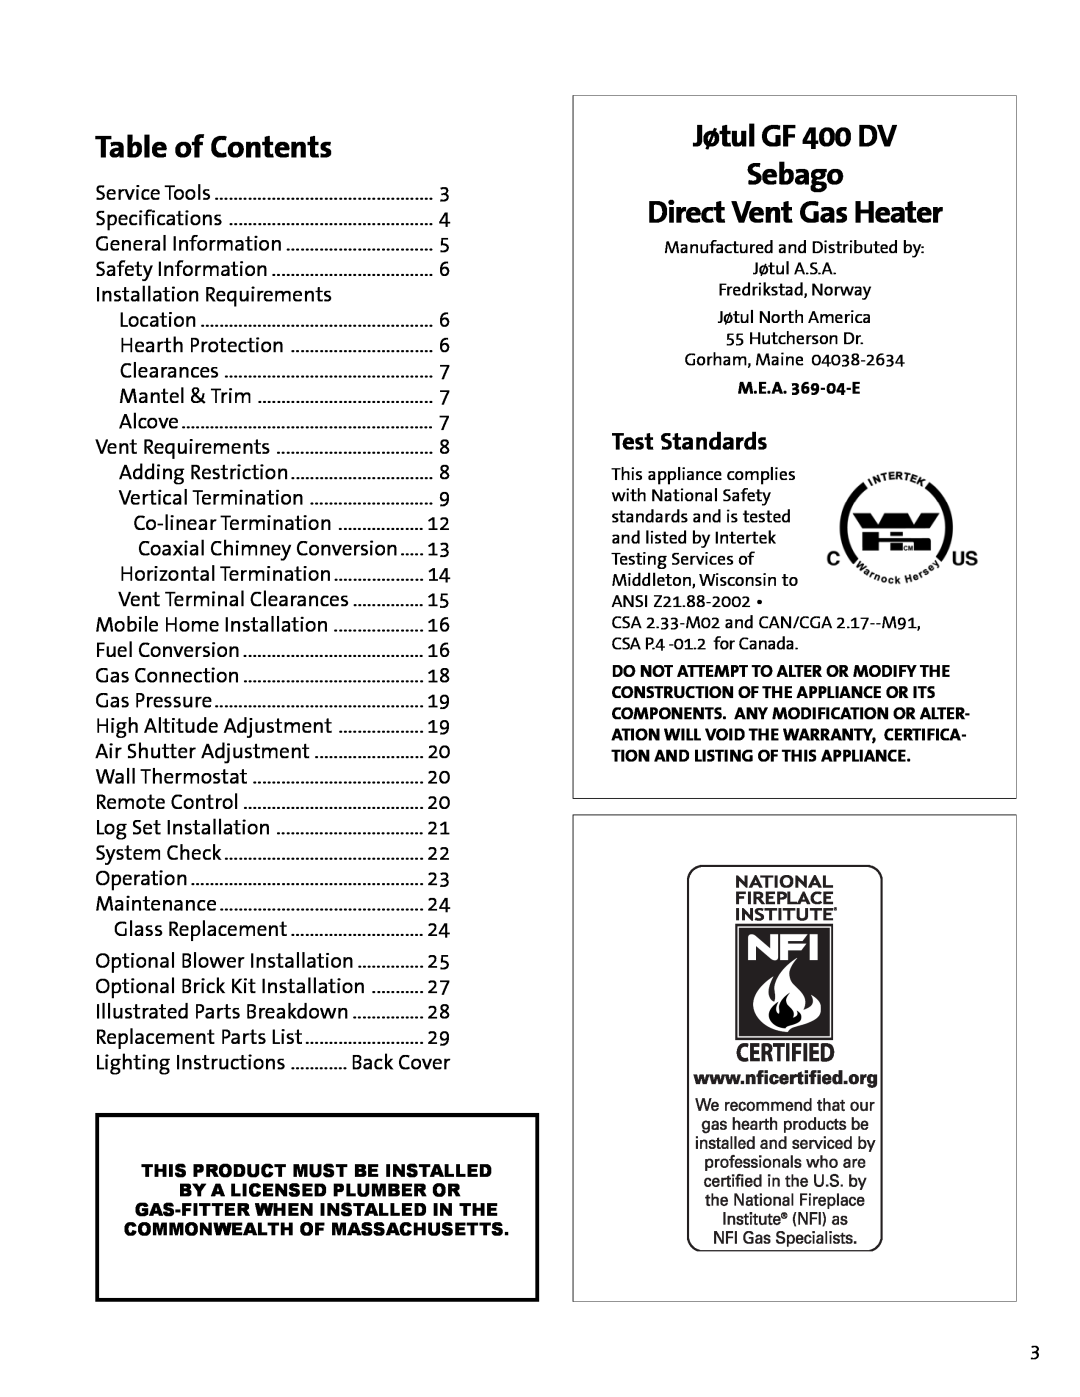 Jotul manual Jøtul GF 400 DV Sebago Direct Vent Gas Heater, Table of Contents, Test Standards 